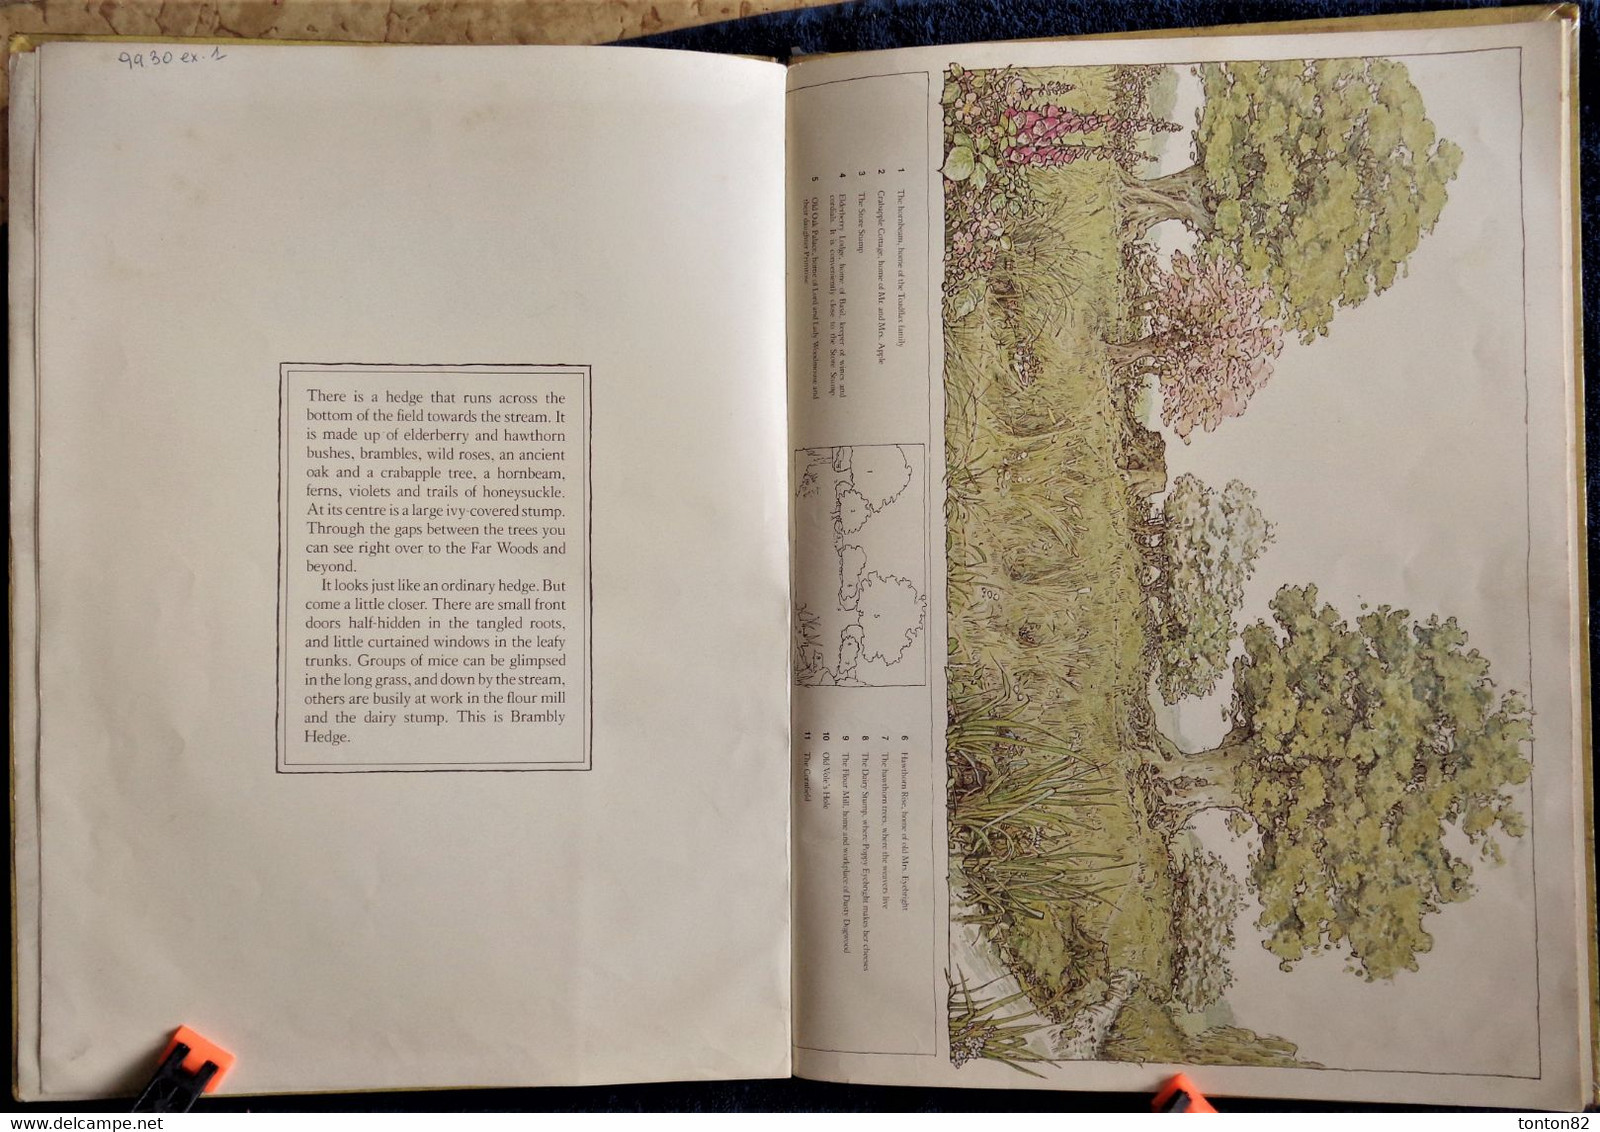 Jill Barklem - The Big Book Of Brambly Hedge - Collins - ( 1981 ) - Texte En Anglais . - Autres & Non Classés